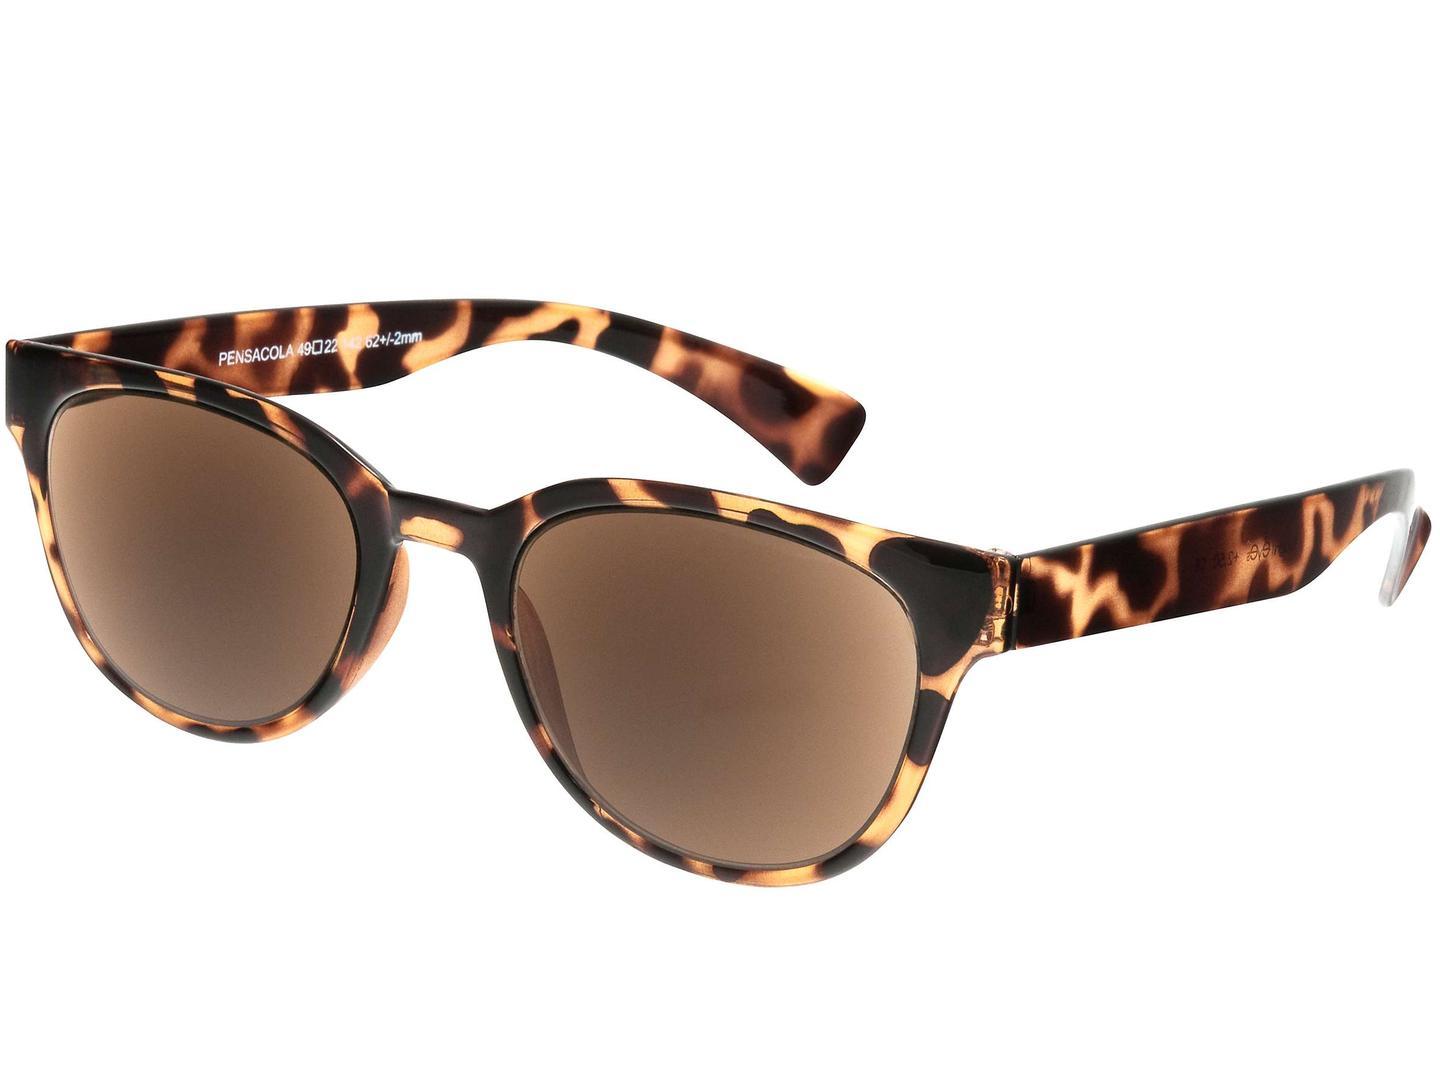 Magnif Eyes Pensacola sunglasses, 21.95 at John Lewis & Partners